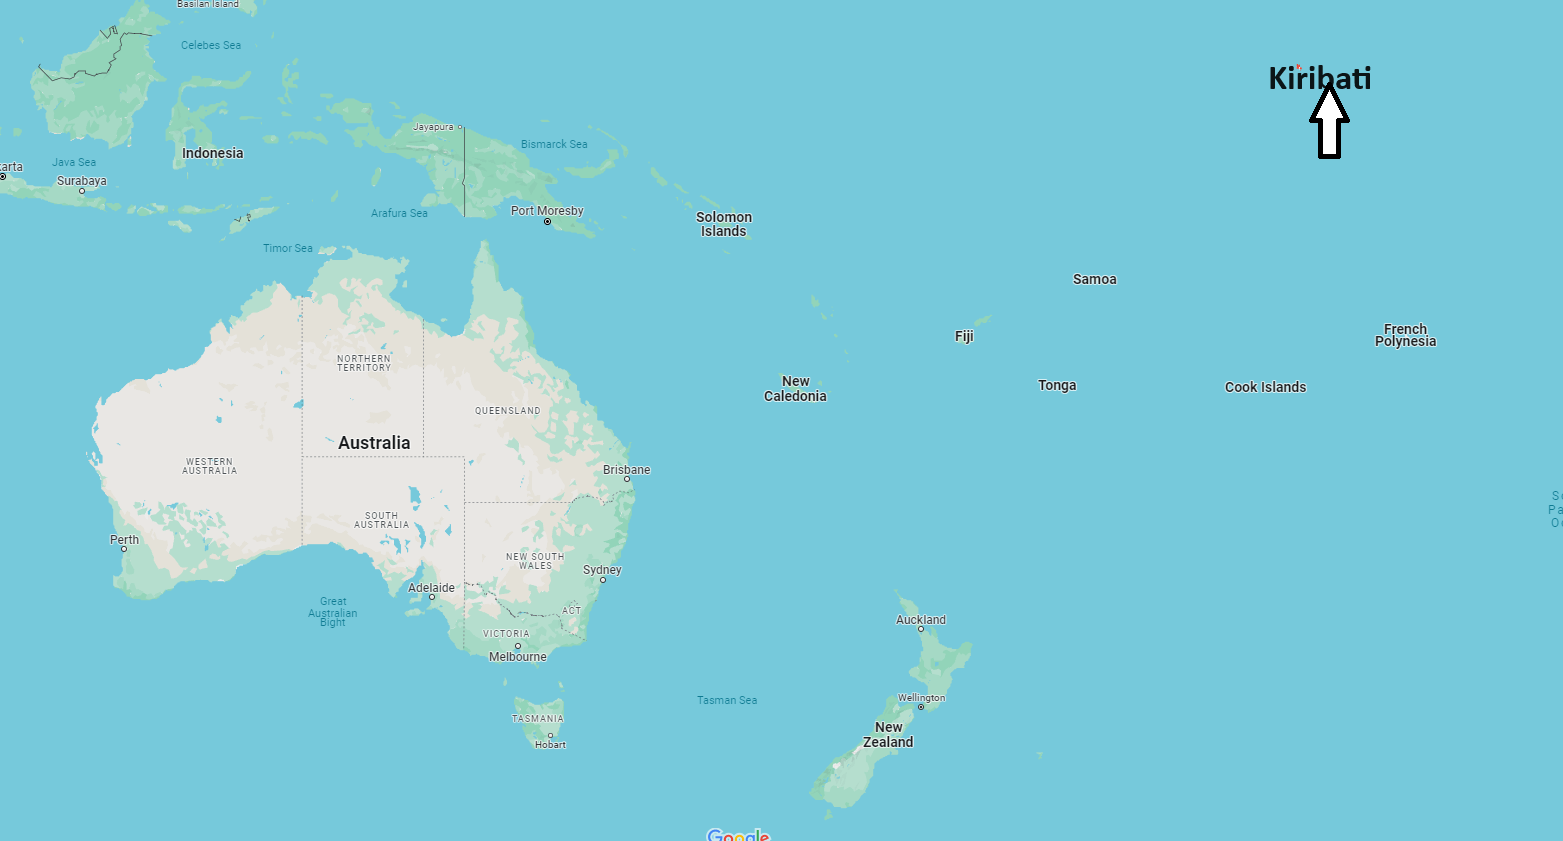 Is Kiribati a part of Australia